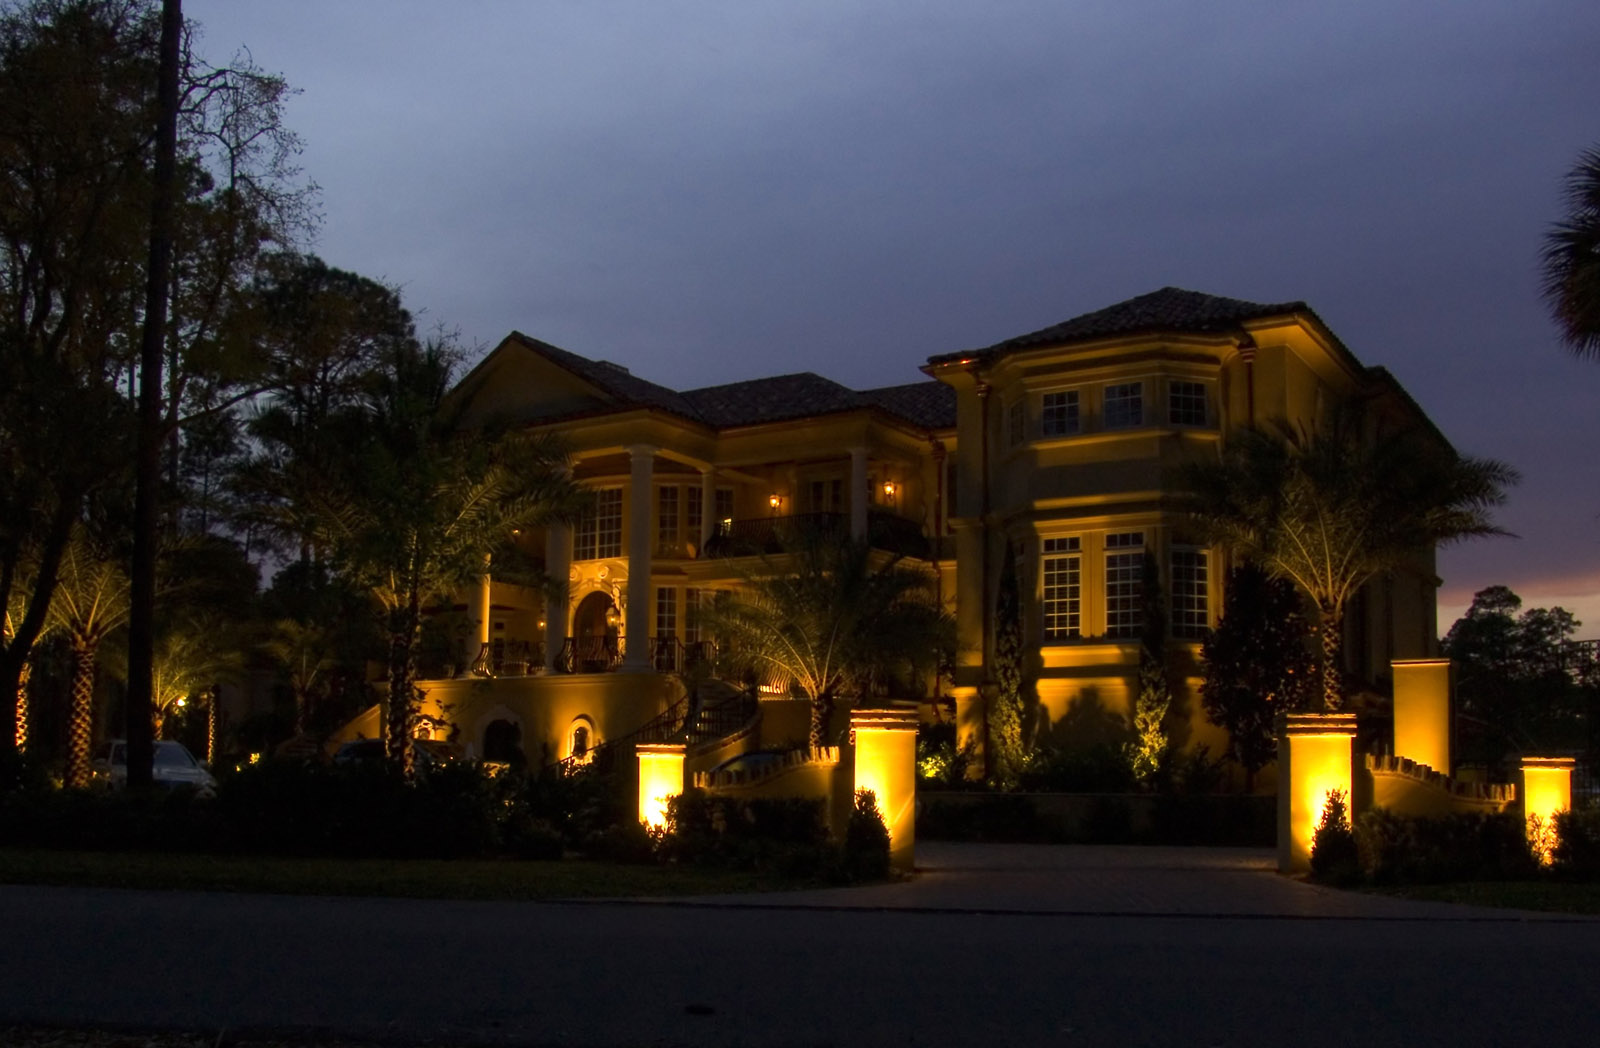 Residential Landscape Lighting at night